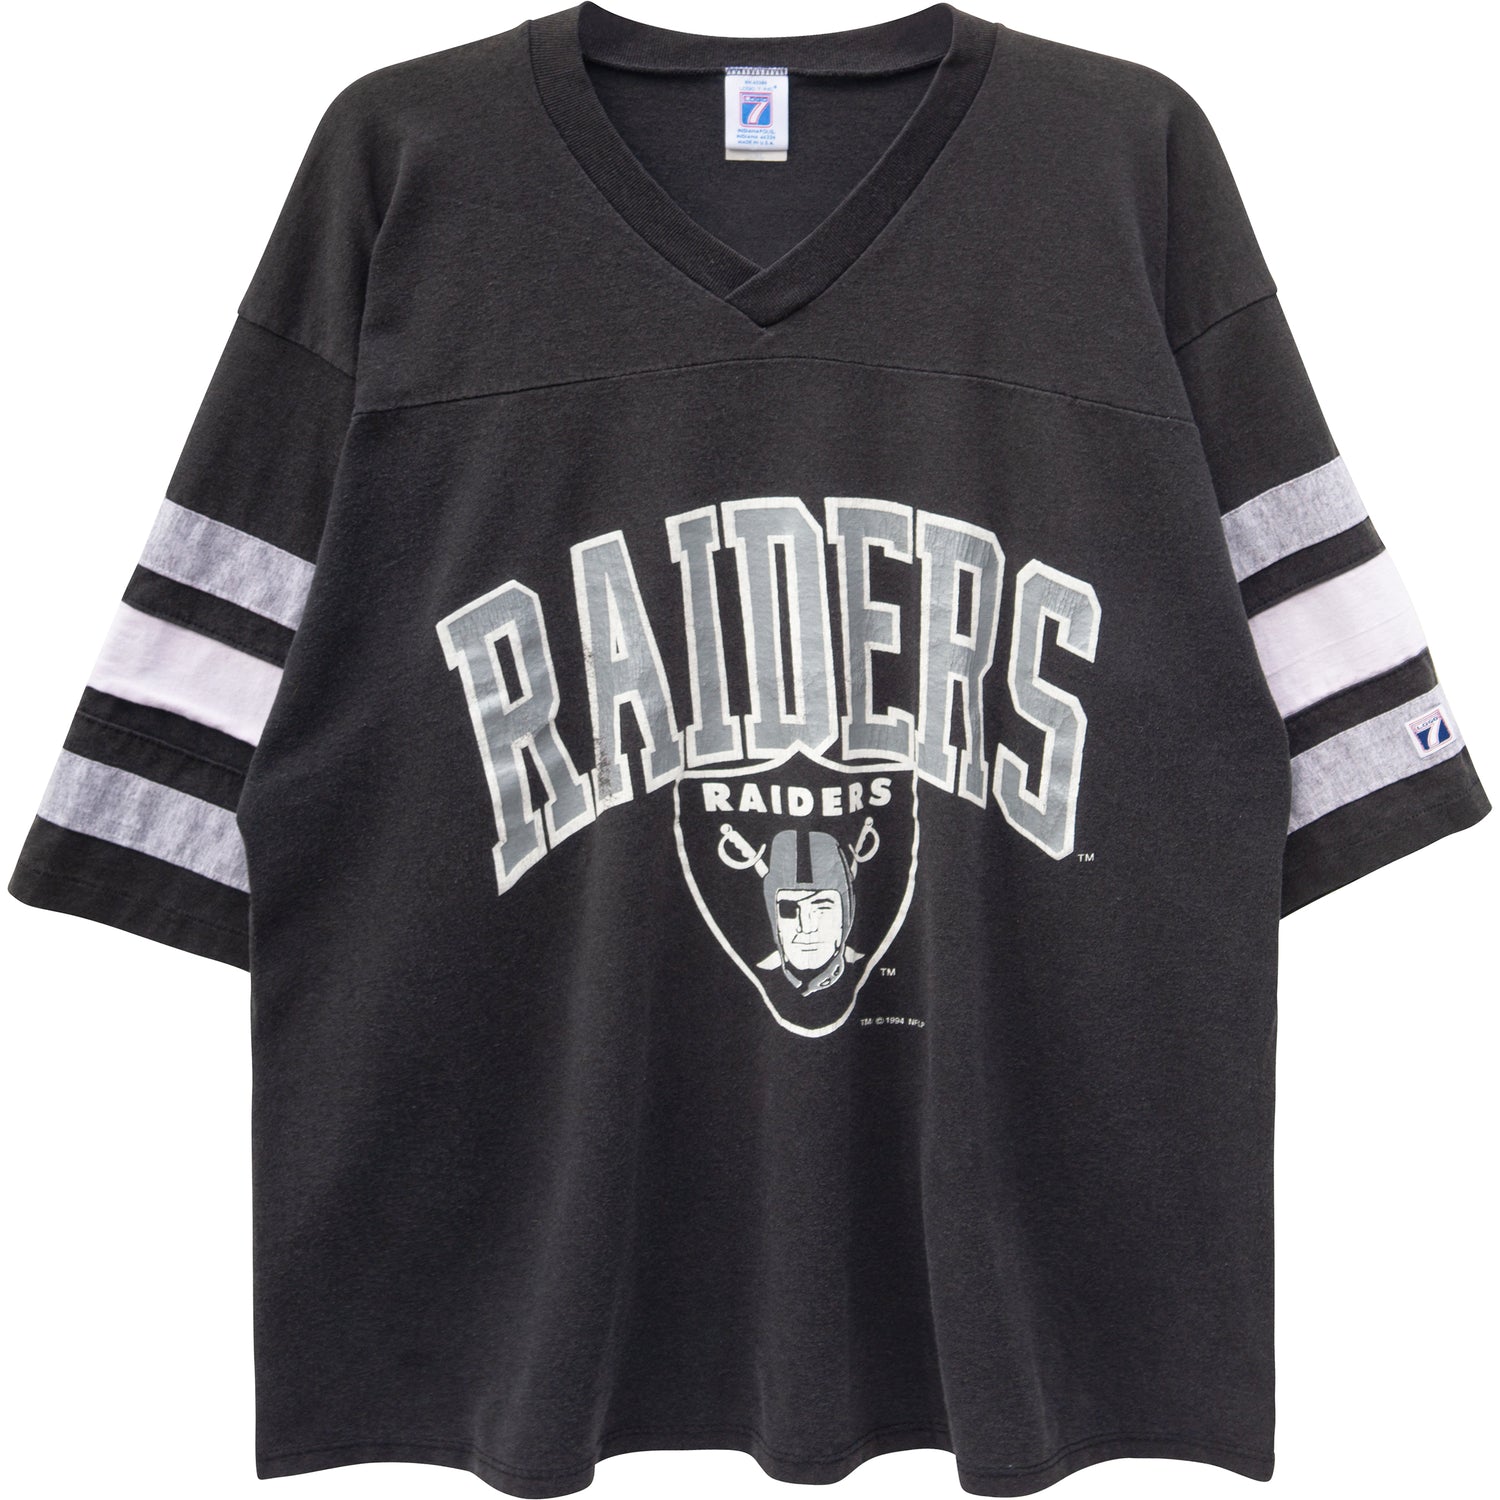 1994 raiders jersey